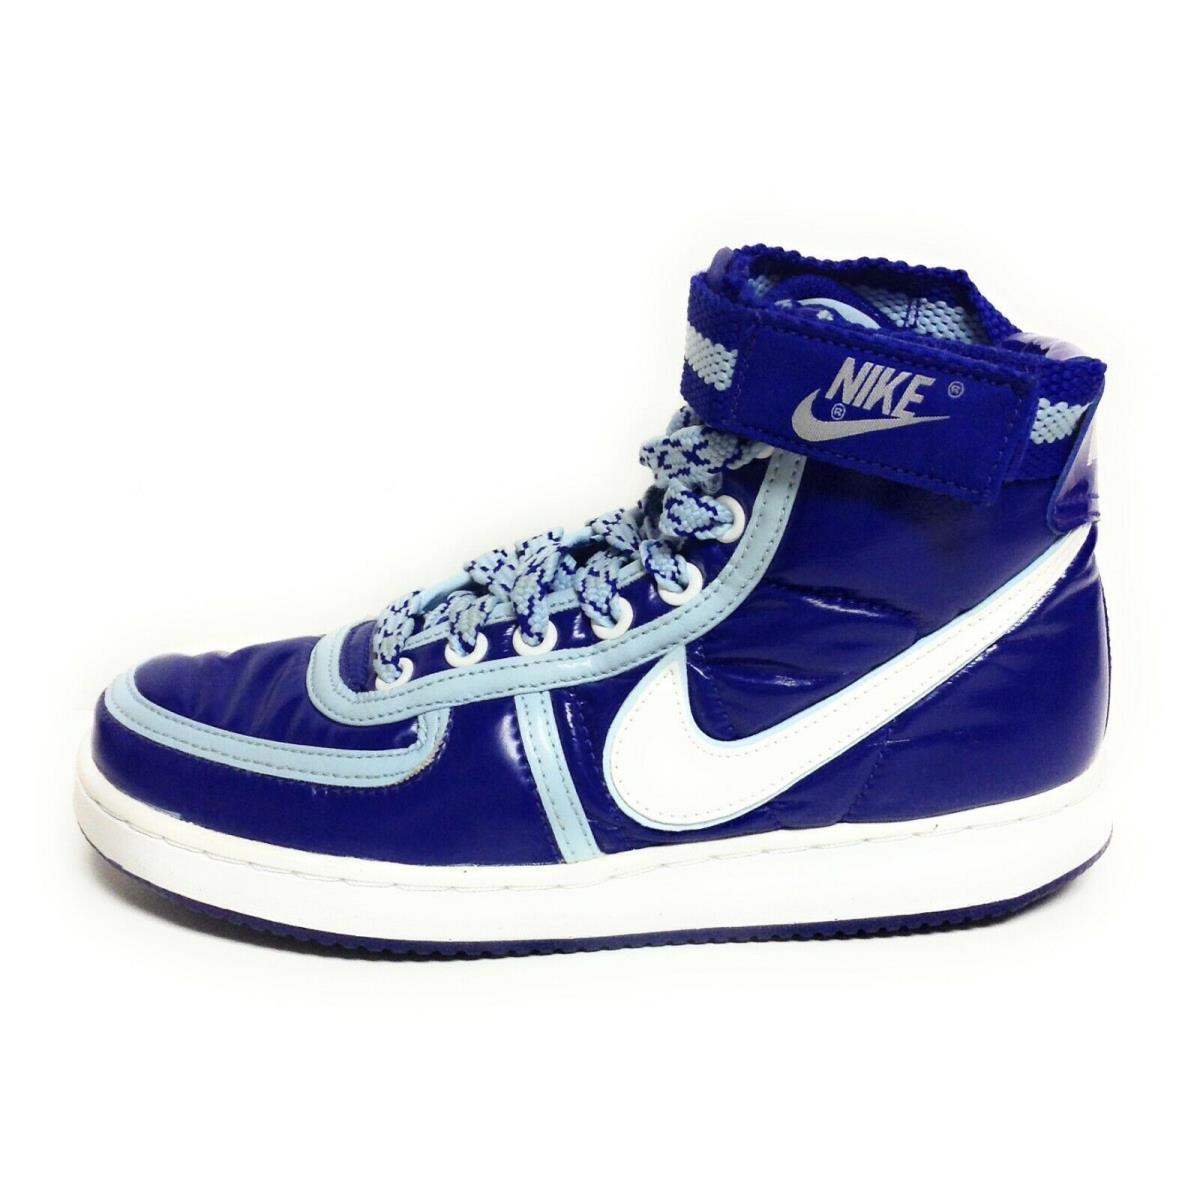 Womens Nike Vandal High 315057 411 Concord Purple 2008 Deadstock Sneakers Shoes